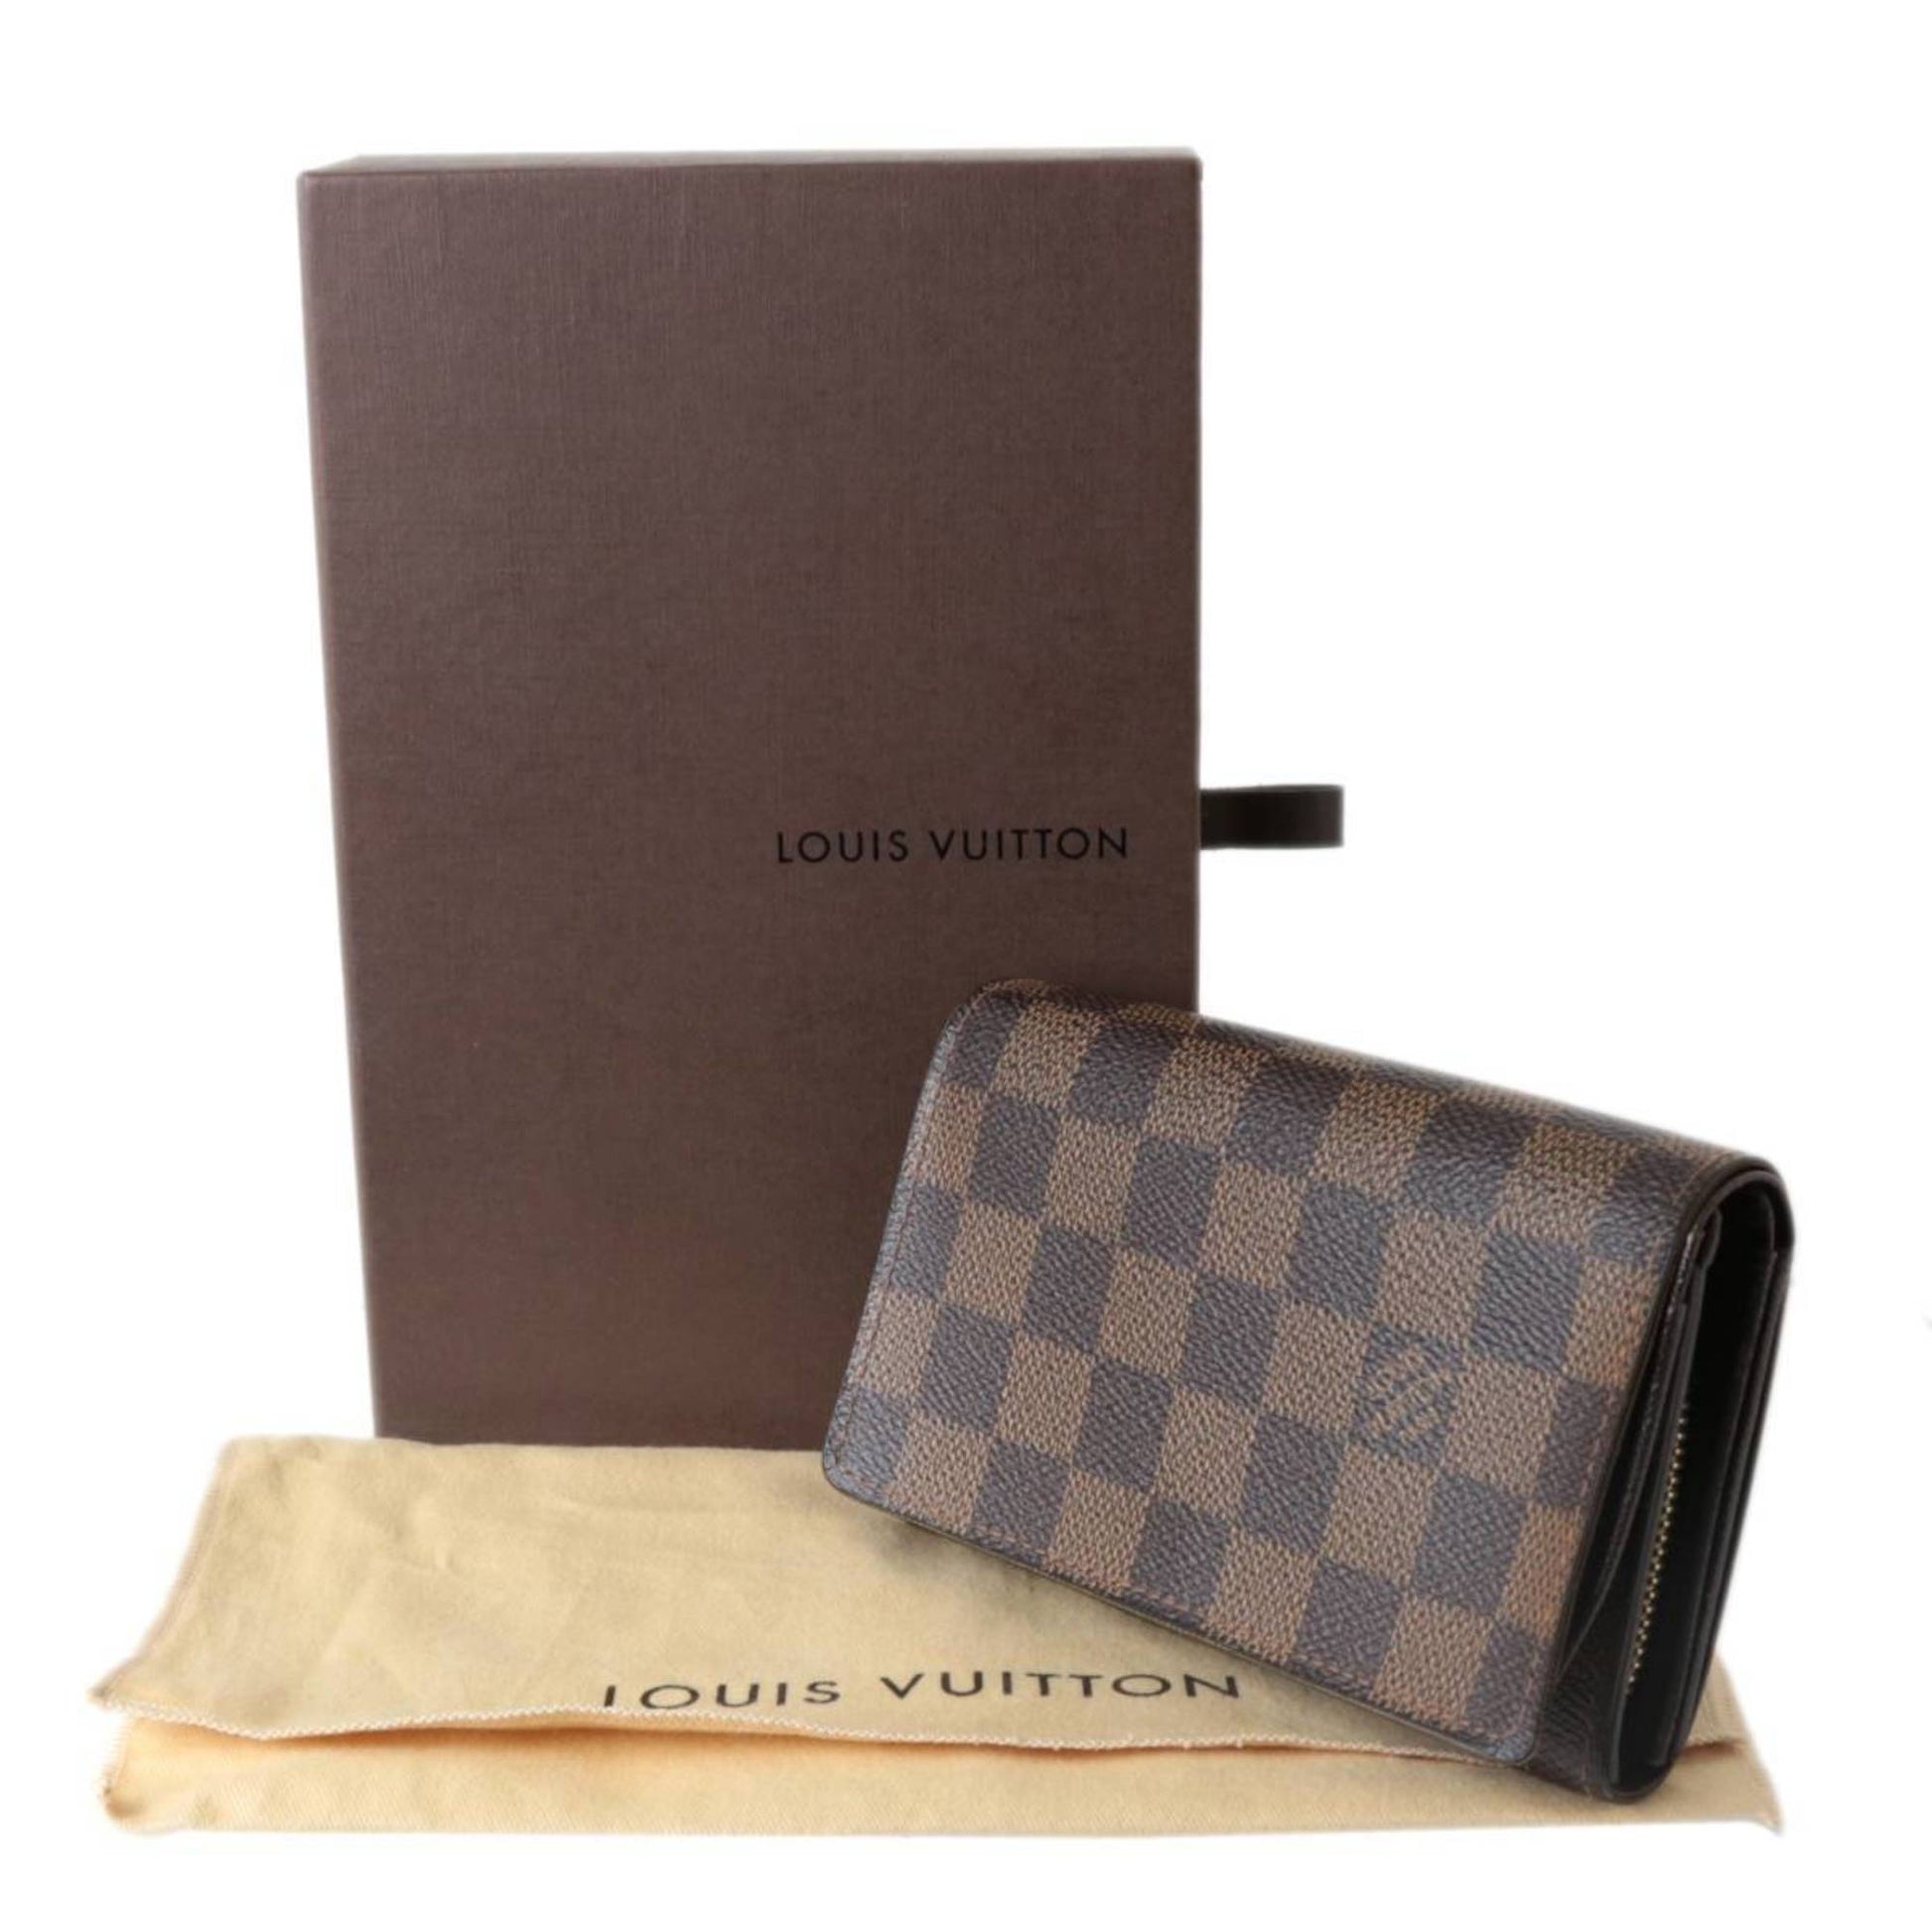 LOUIS VUITTON/Louis Vuitton Portefeuille Tresor bi-fold wallet Damier